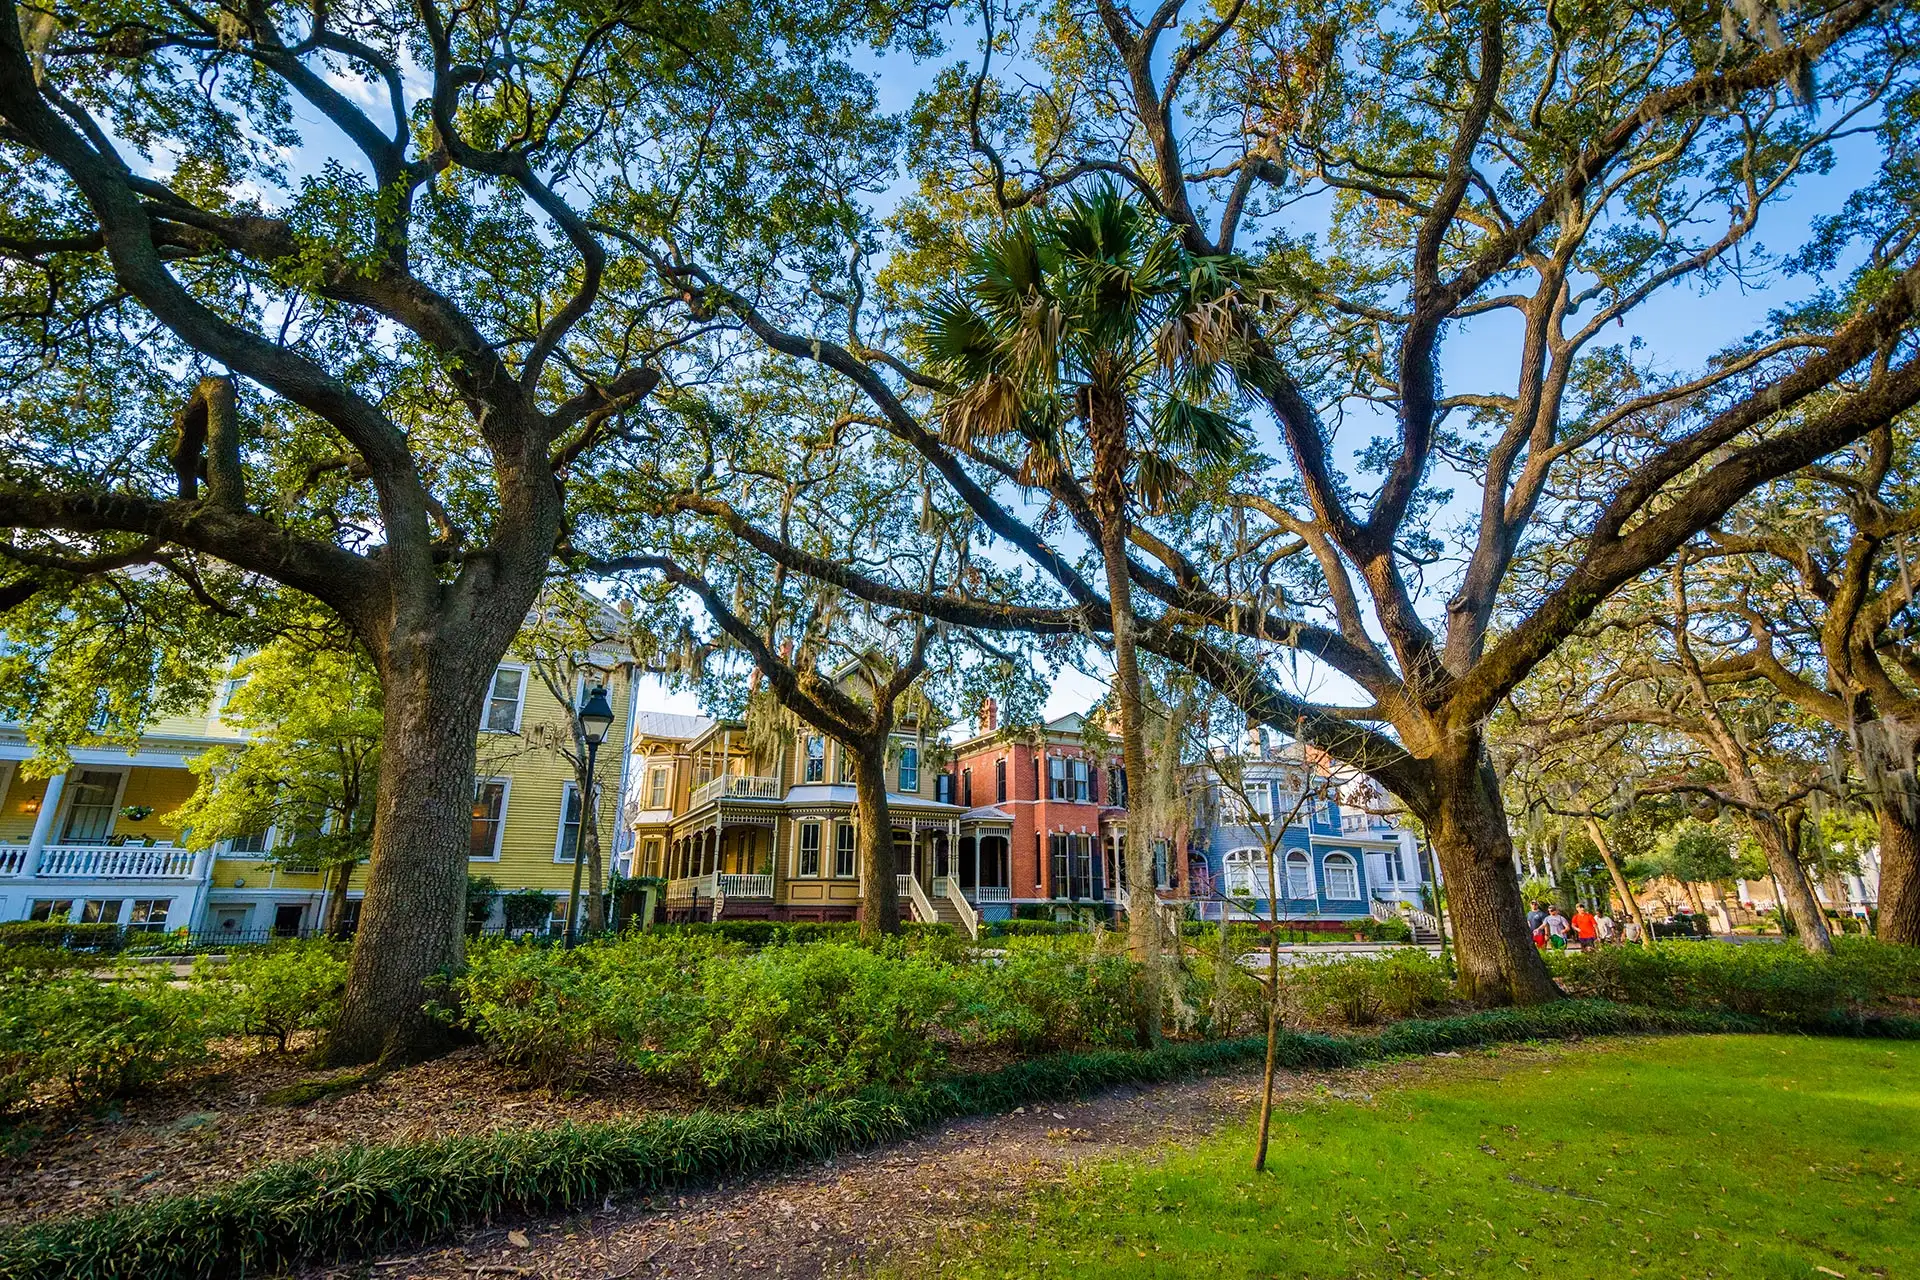 Savannah, Georgia; Photo Courtesy of Jon Bilous/Shutterstock.com